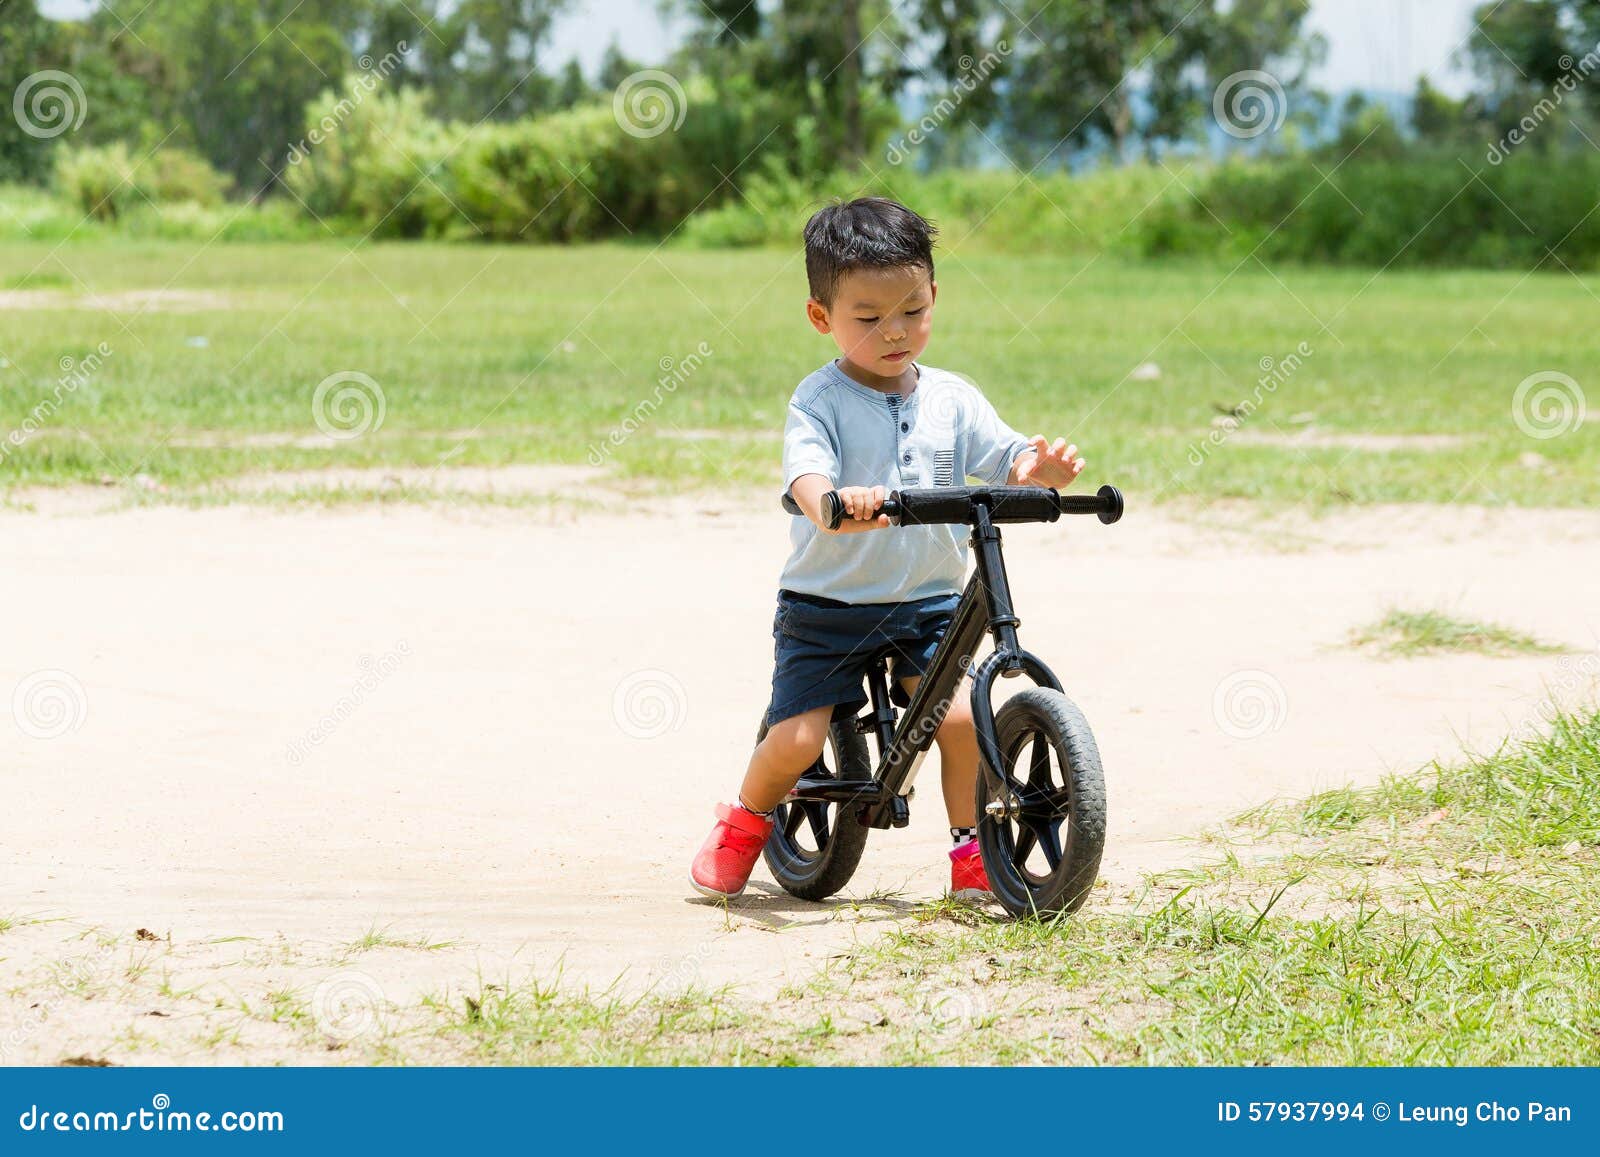 small boy riding bike